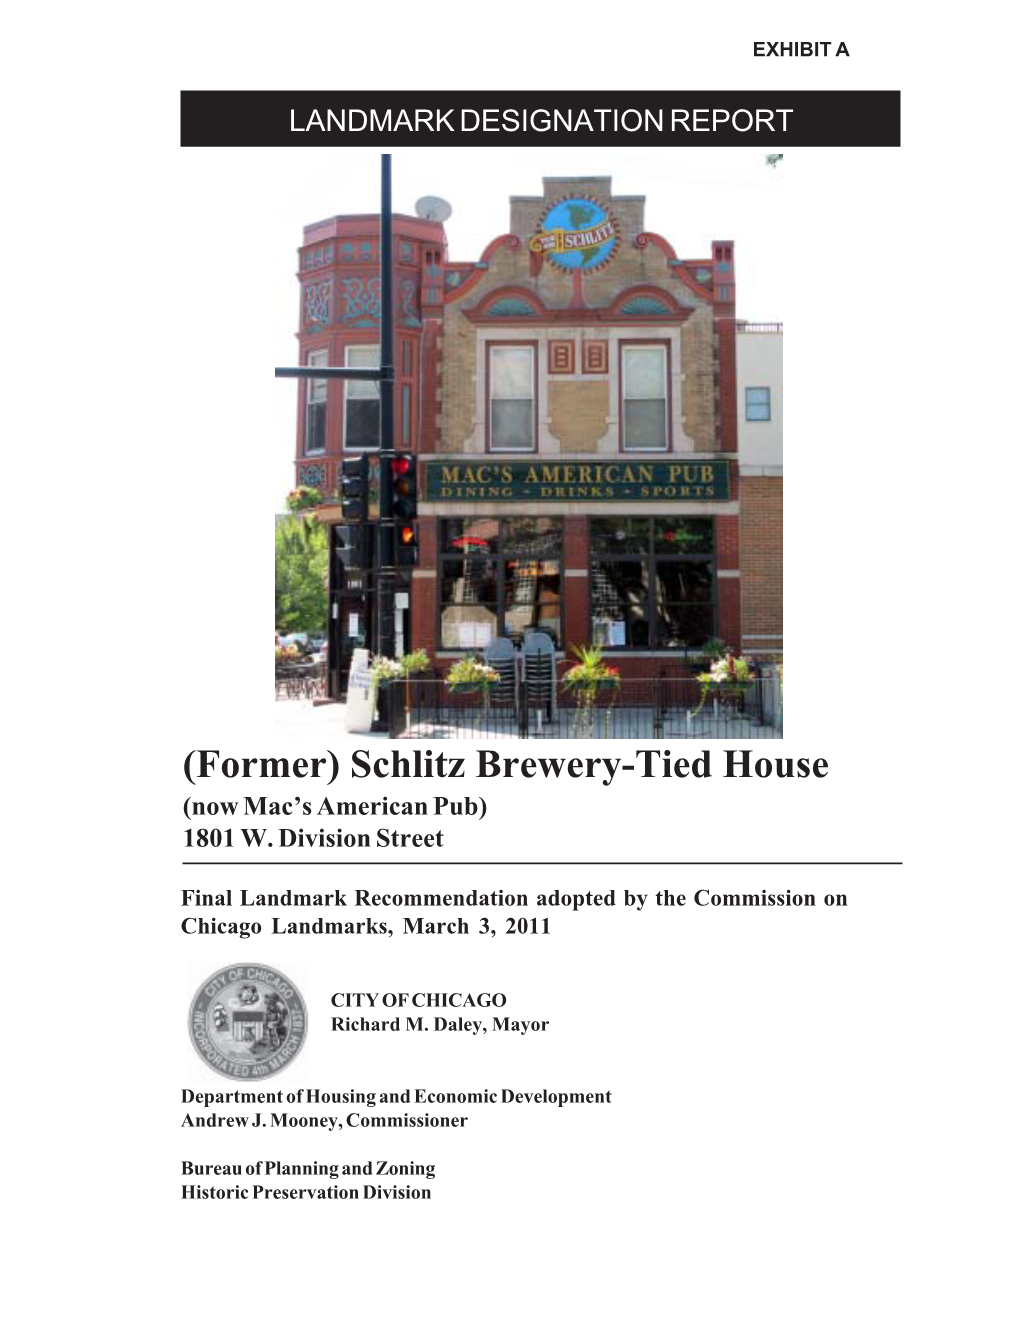 (Former) Schlitz Brewery-Tied House (Now Mac’S American Pub) 1801 W